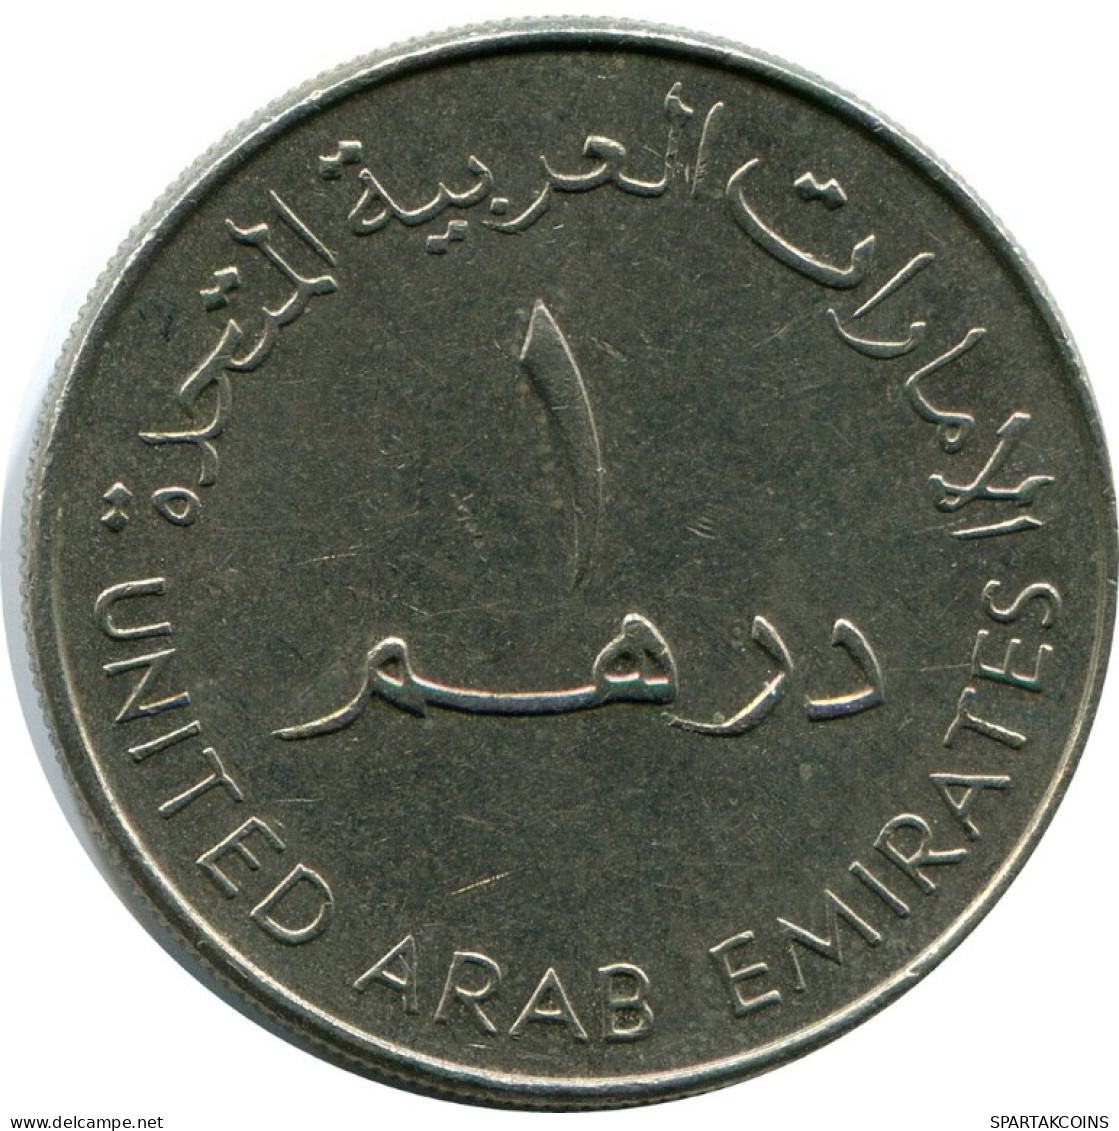 1 DIRHAM 2000 UAE UNITED ARAB EMIRATES Islamic Coin #AH998.U.A - Emirati Arabi